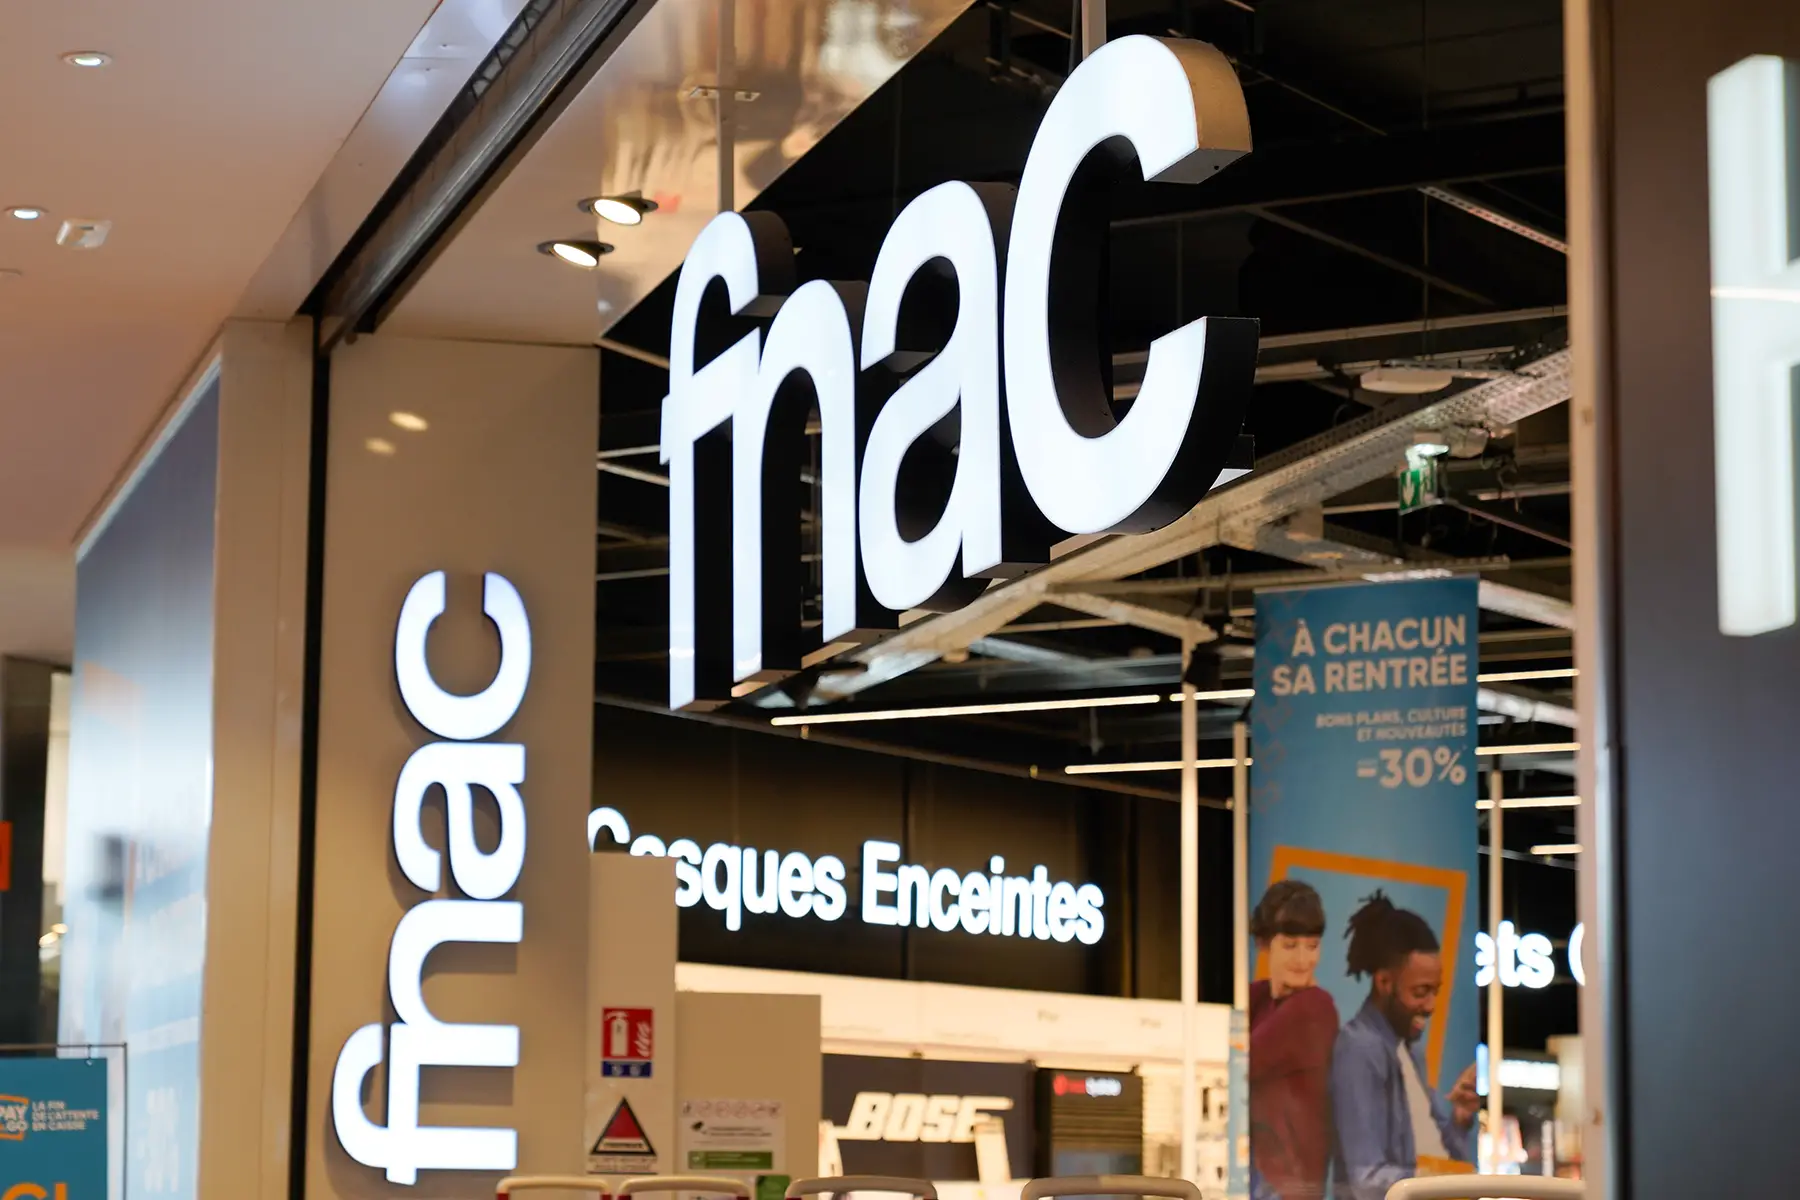 Fnac, an electronics chain shop in Bordeaux, France